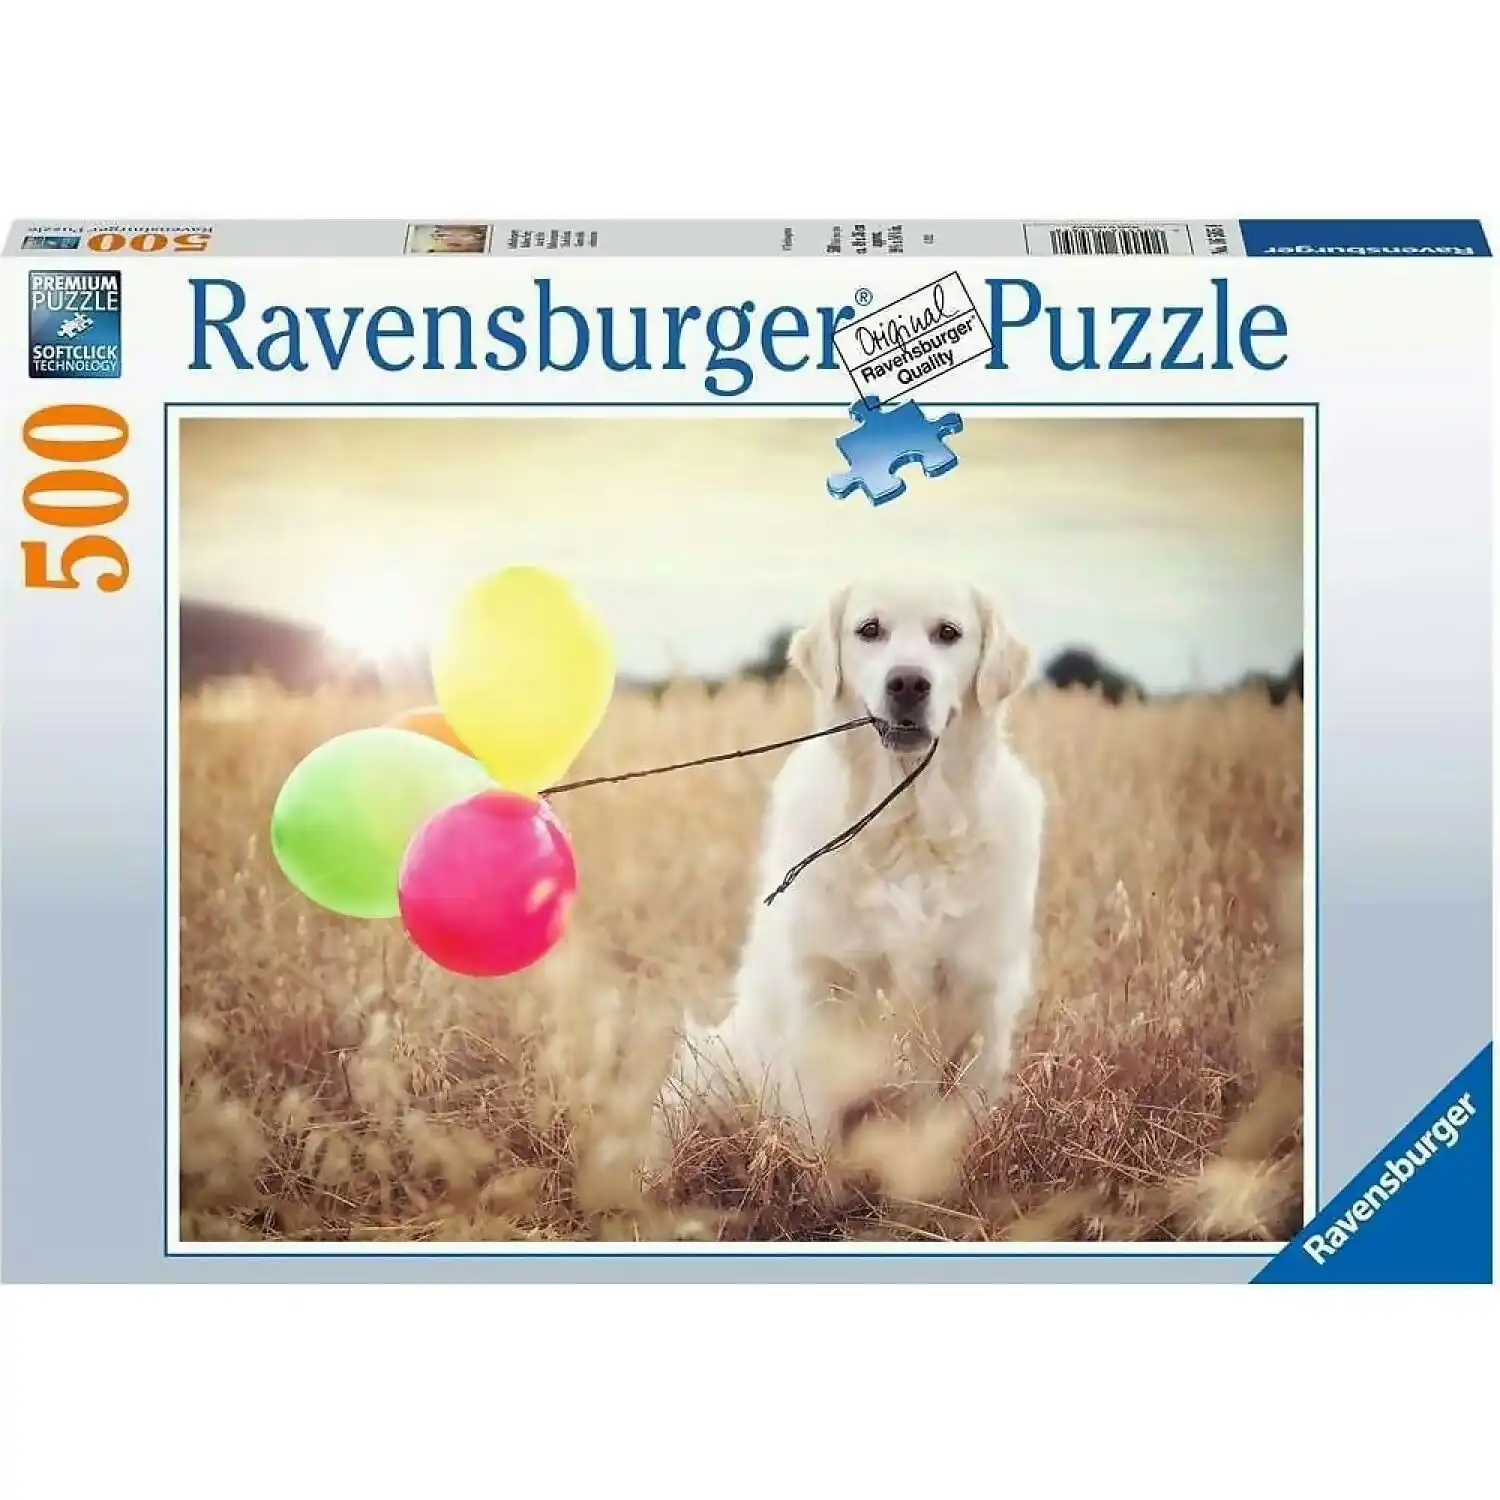 Ravensburger - Balloon Party Jigsaw Puzzle 500pc